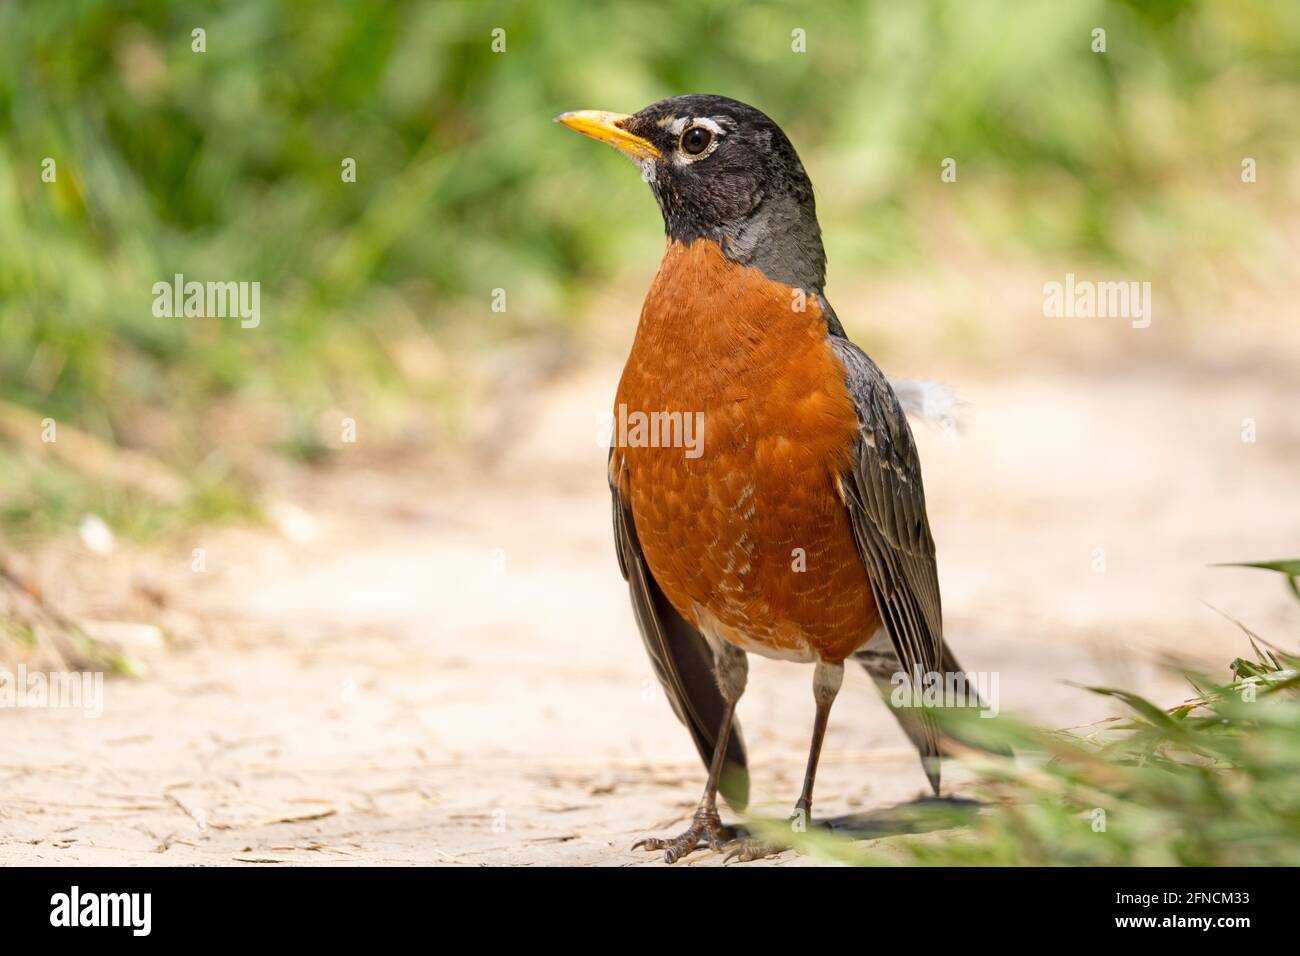 American Robin, (Turdus migratorius) bird, songbird standing on the ground Stock Photo